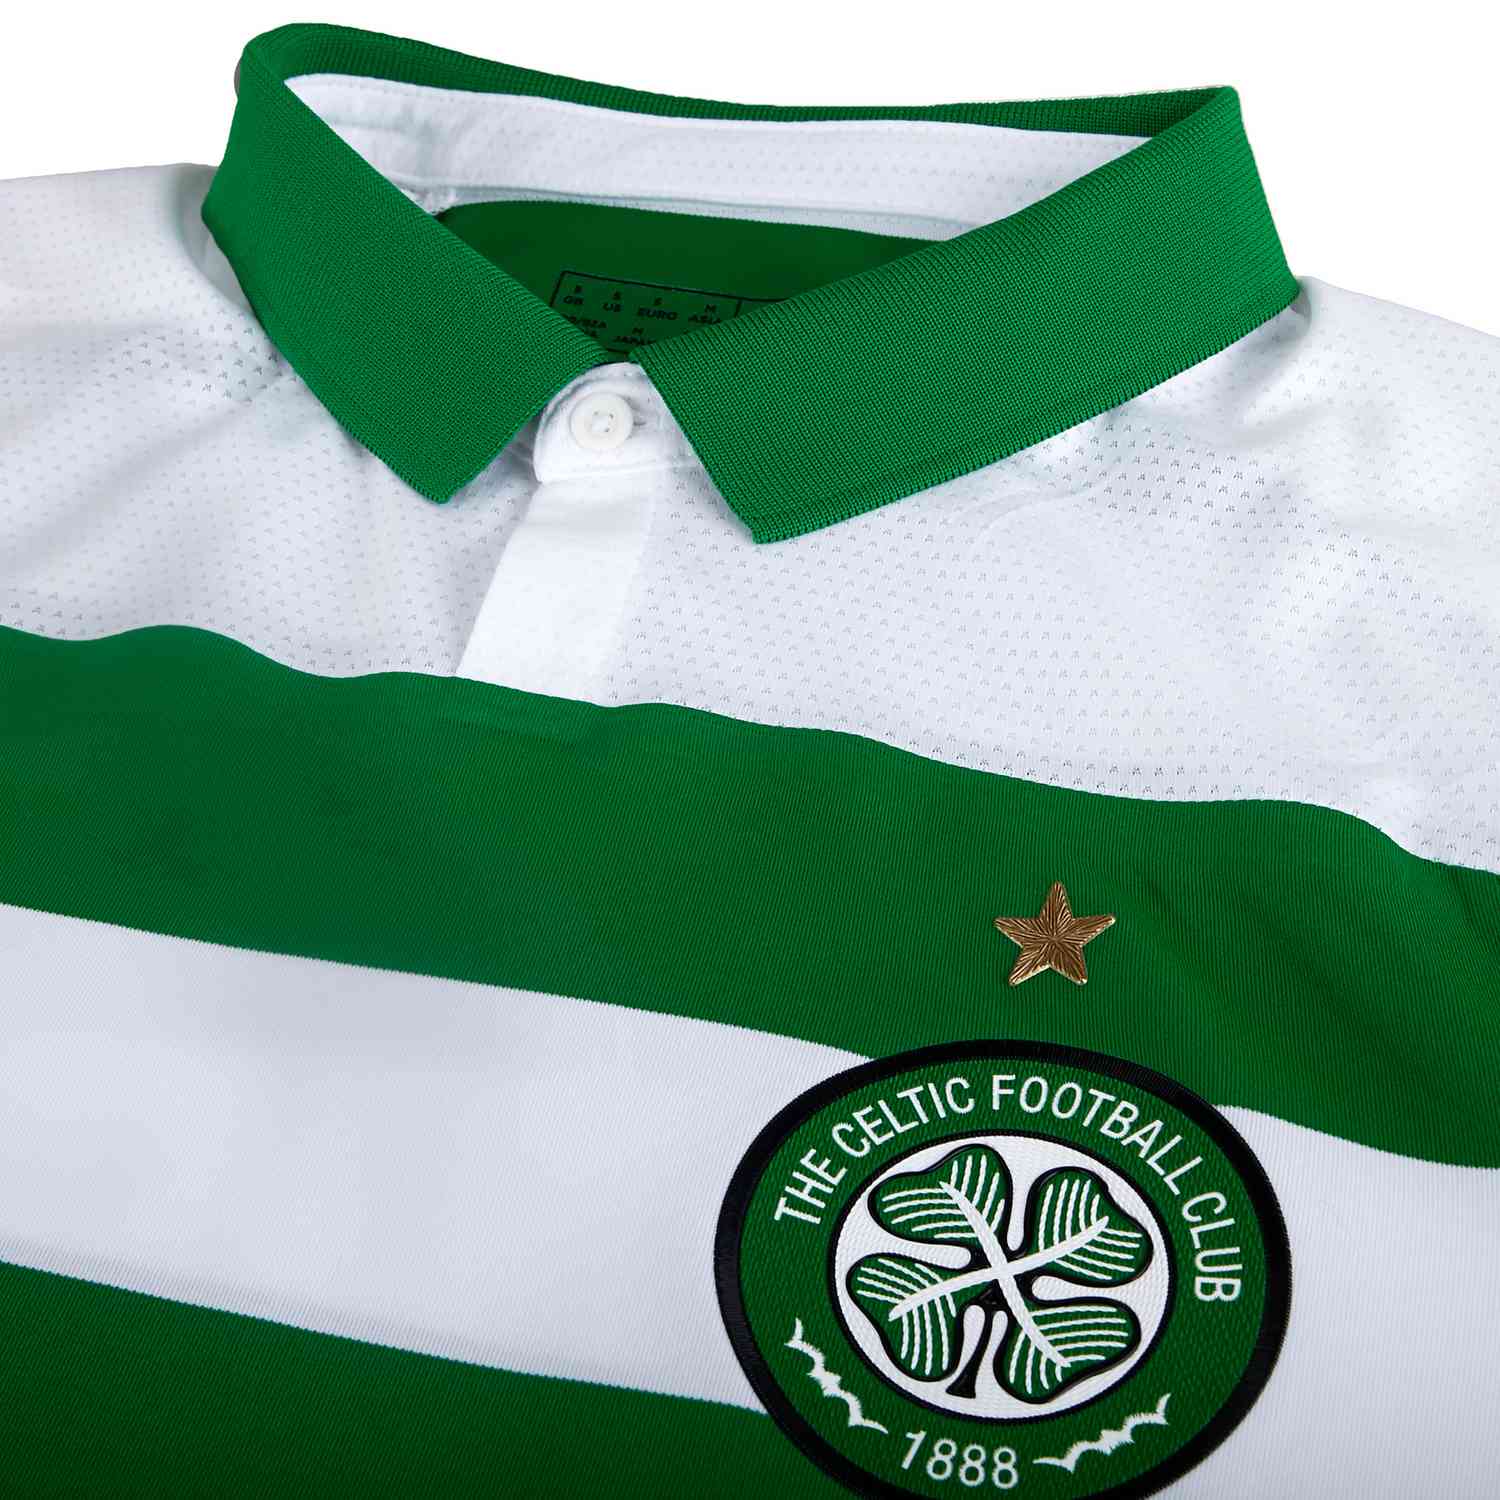 new celtic jersey 2019